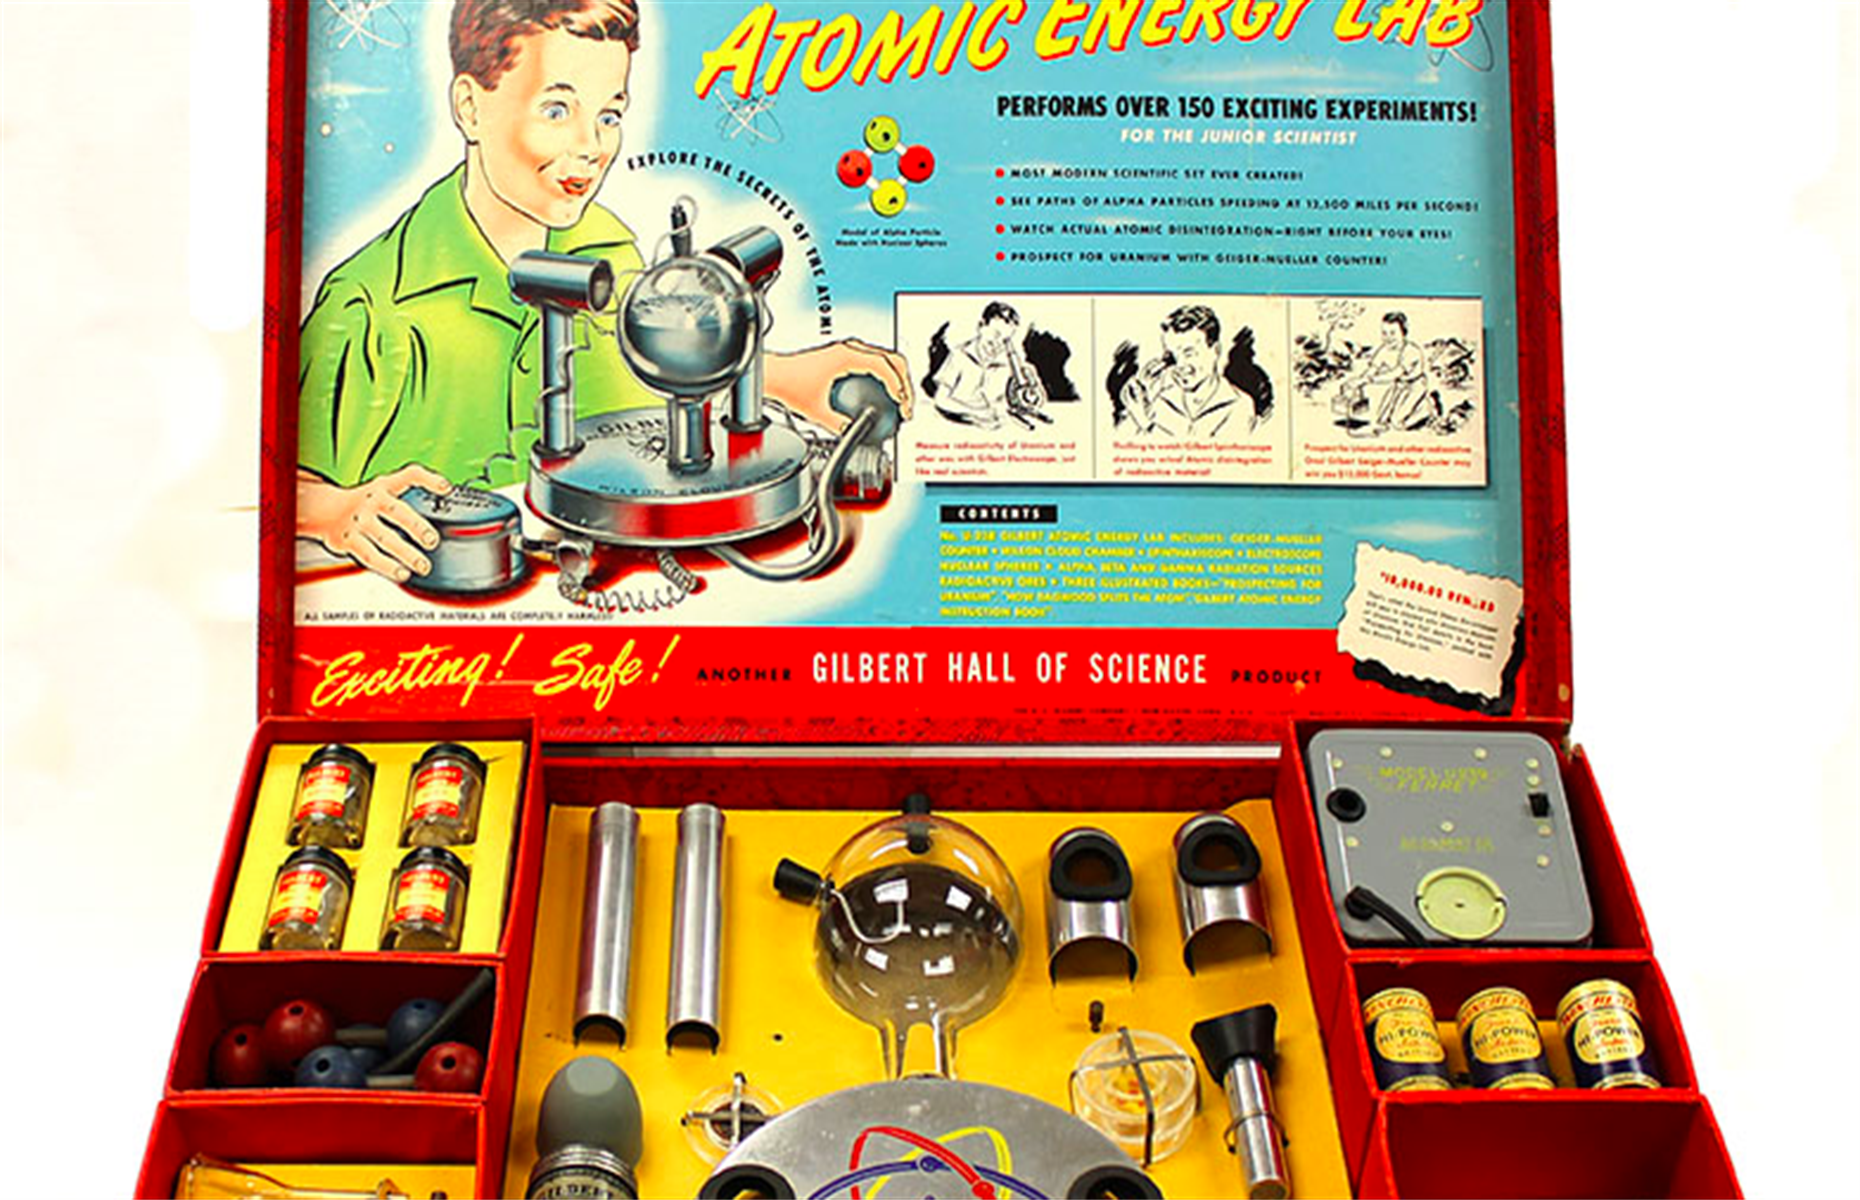 1951: Gilbert U-238 Atomic Energy Lab